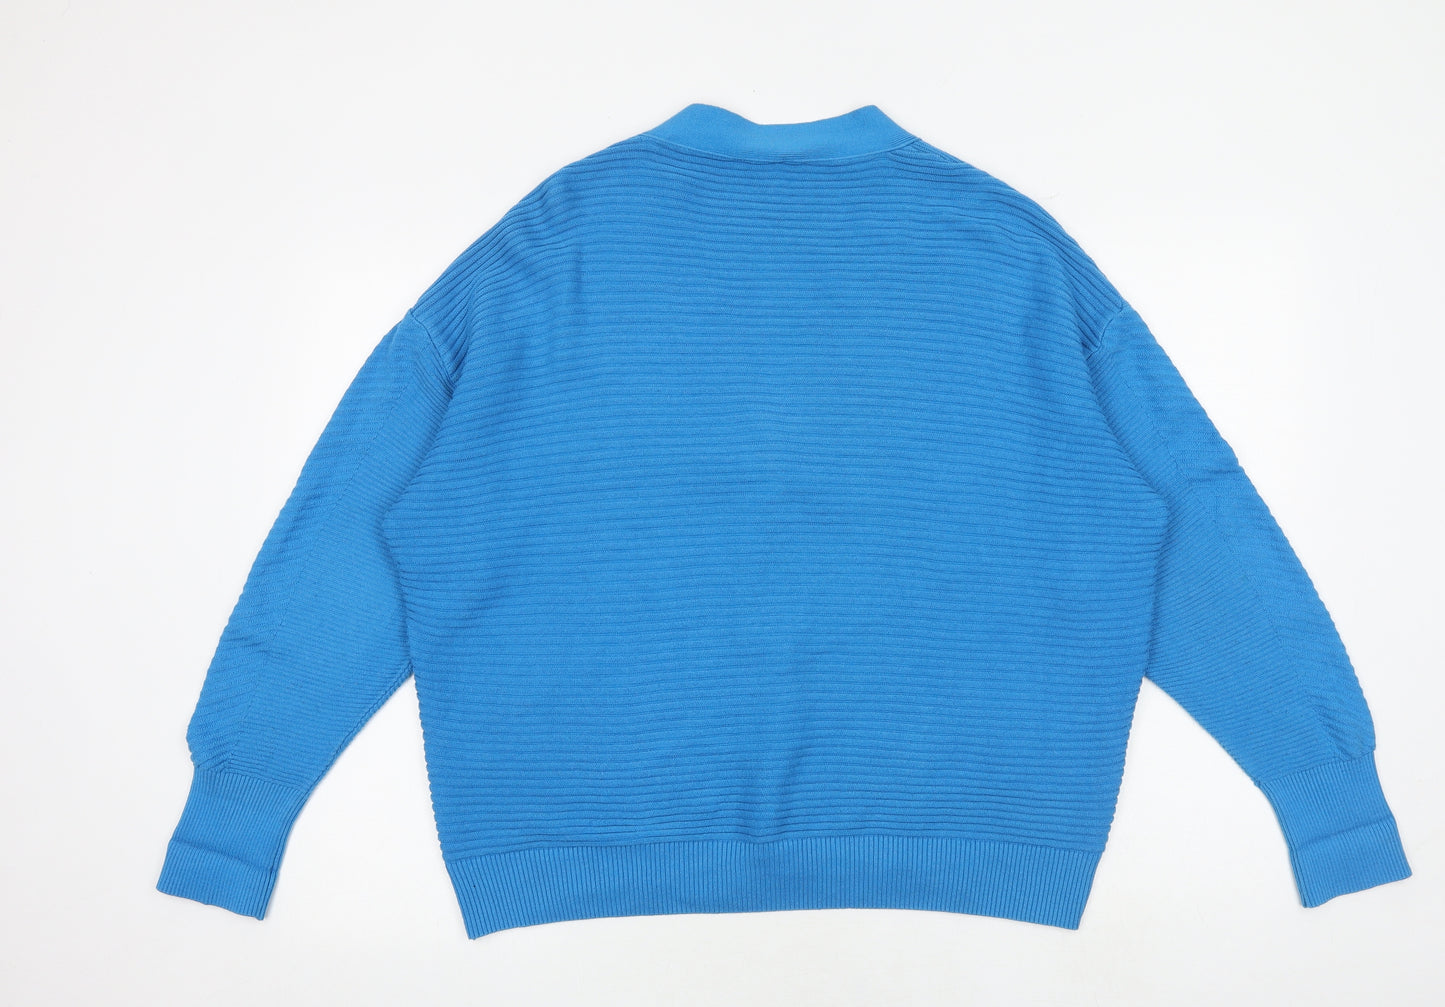 Warehouse Womens Blue V-Neck Cotton Cardigan Jumper Size M